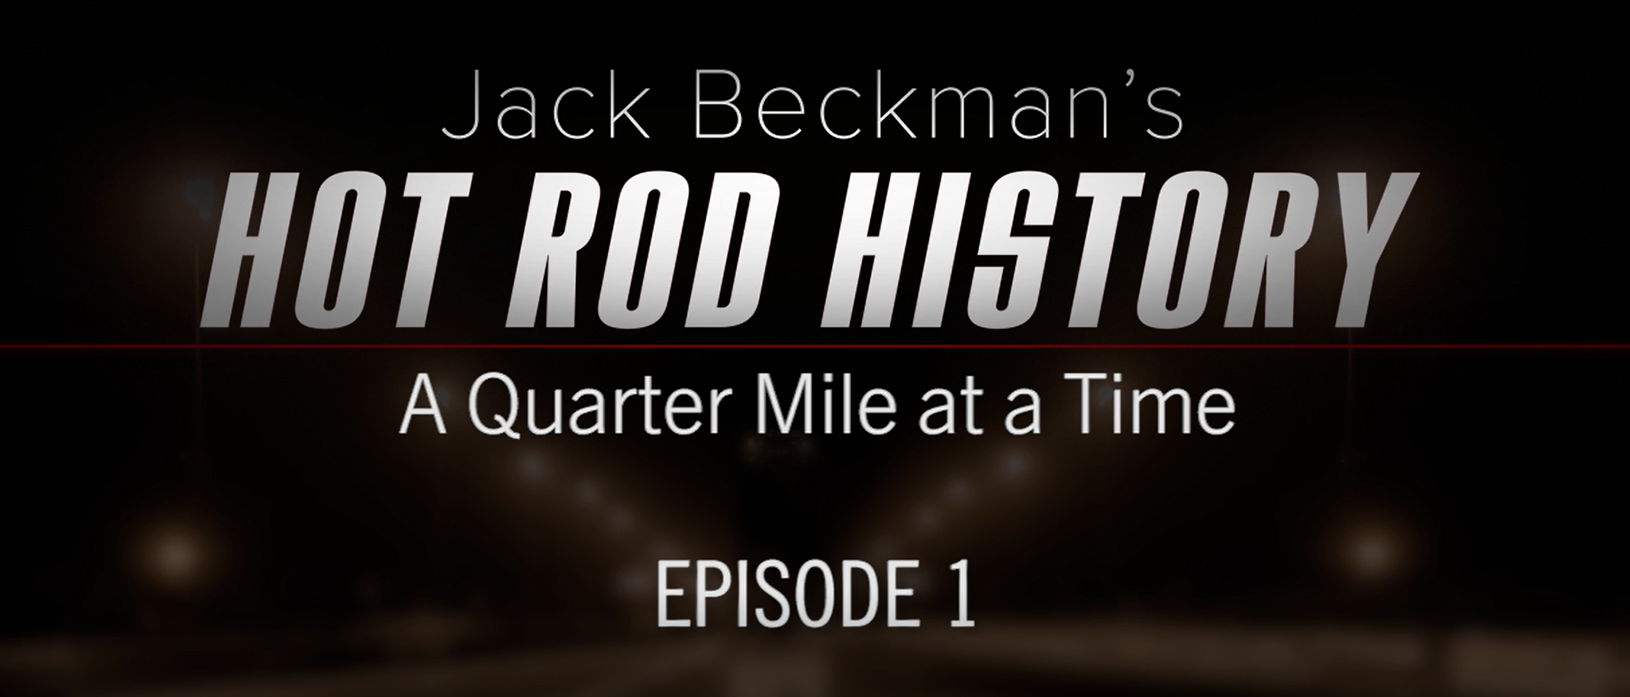 Jack Beckman’s Hot Rod History a Quarter-Mile at a Time – Episode 1